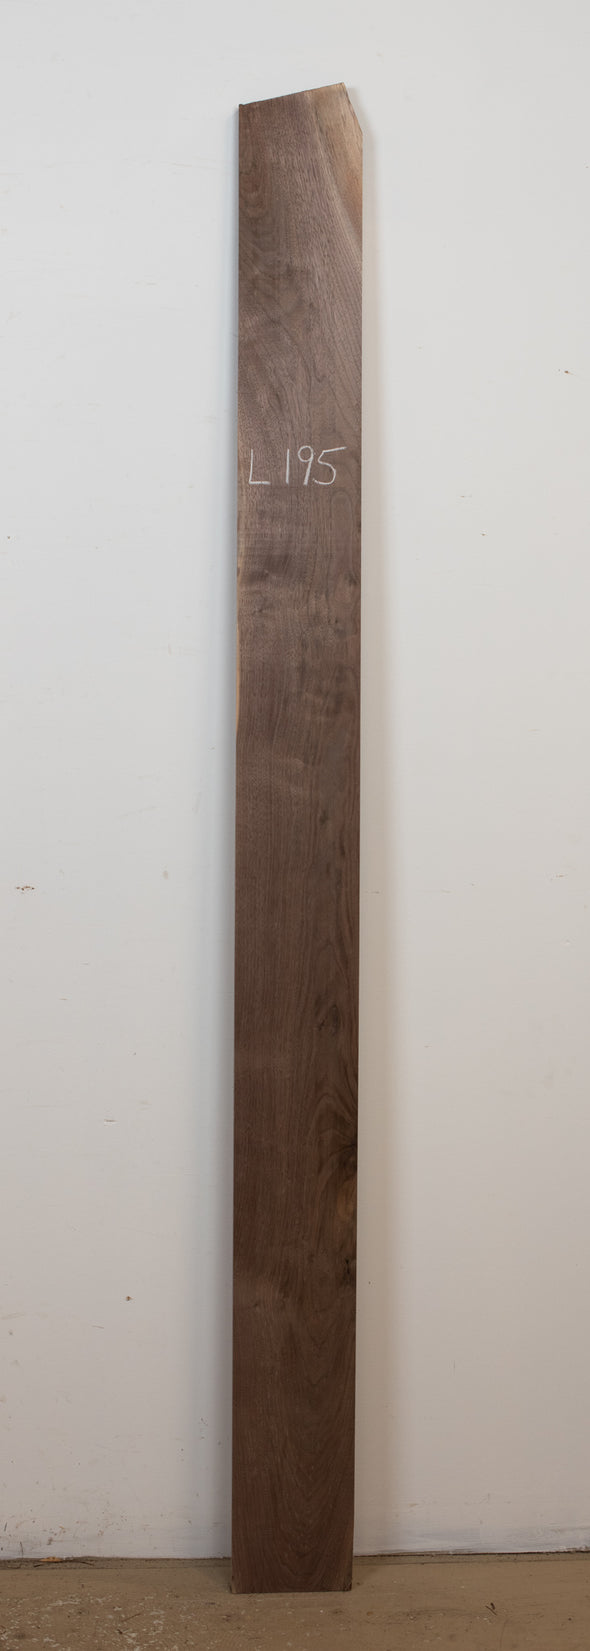 Lumber - L195